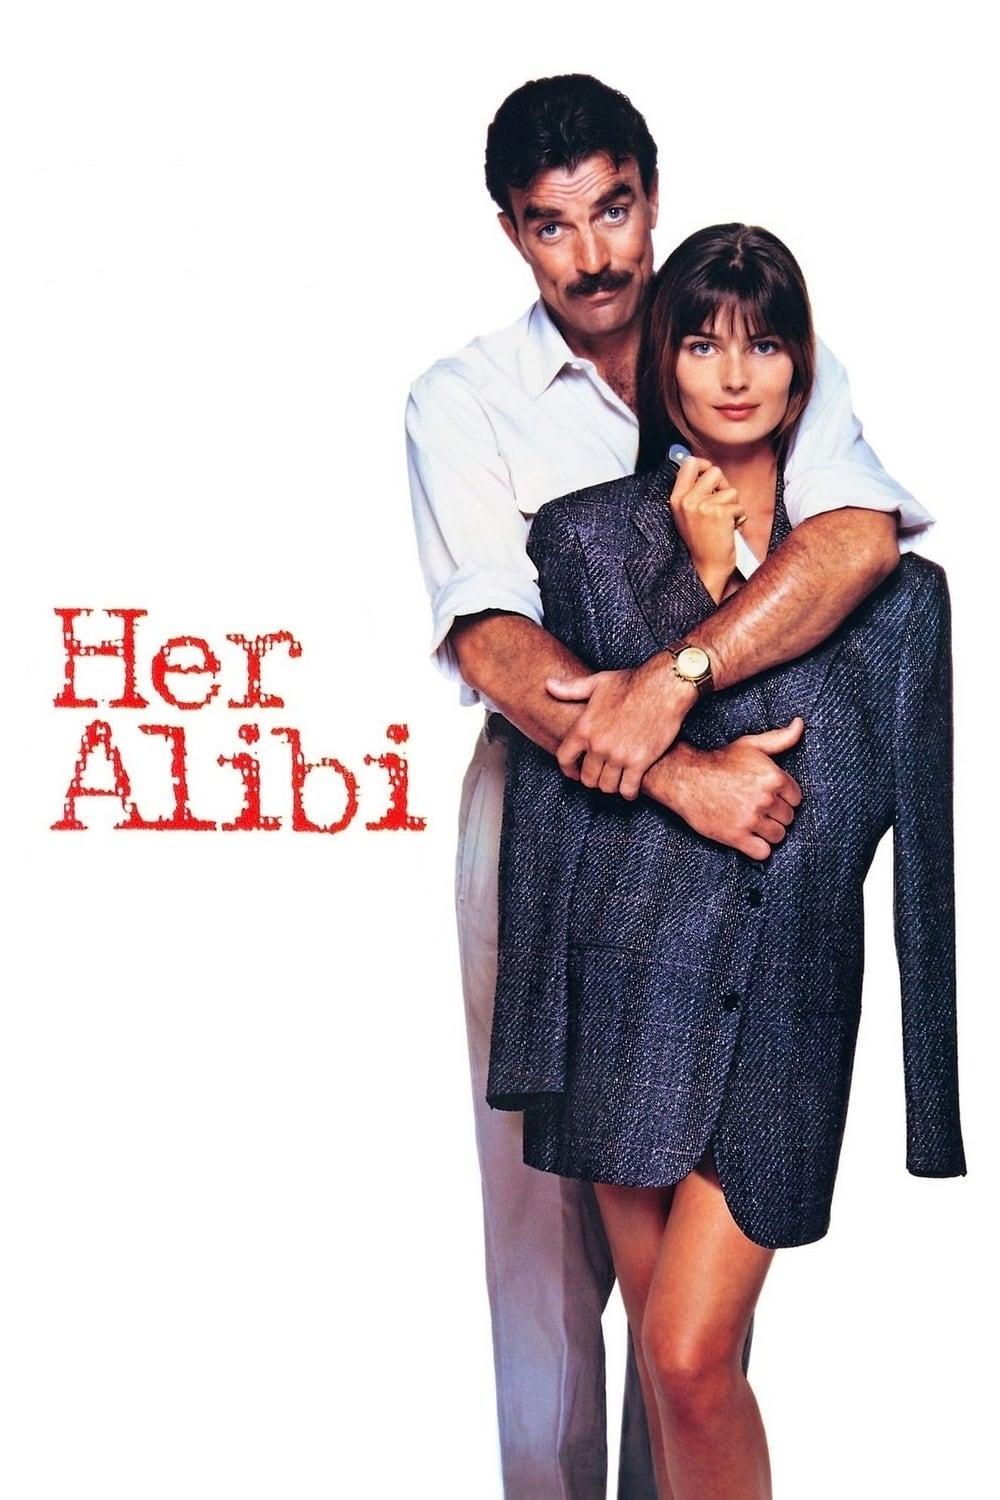 Her Alibi poster